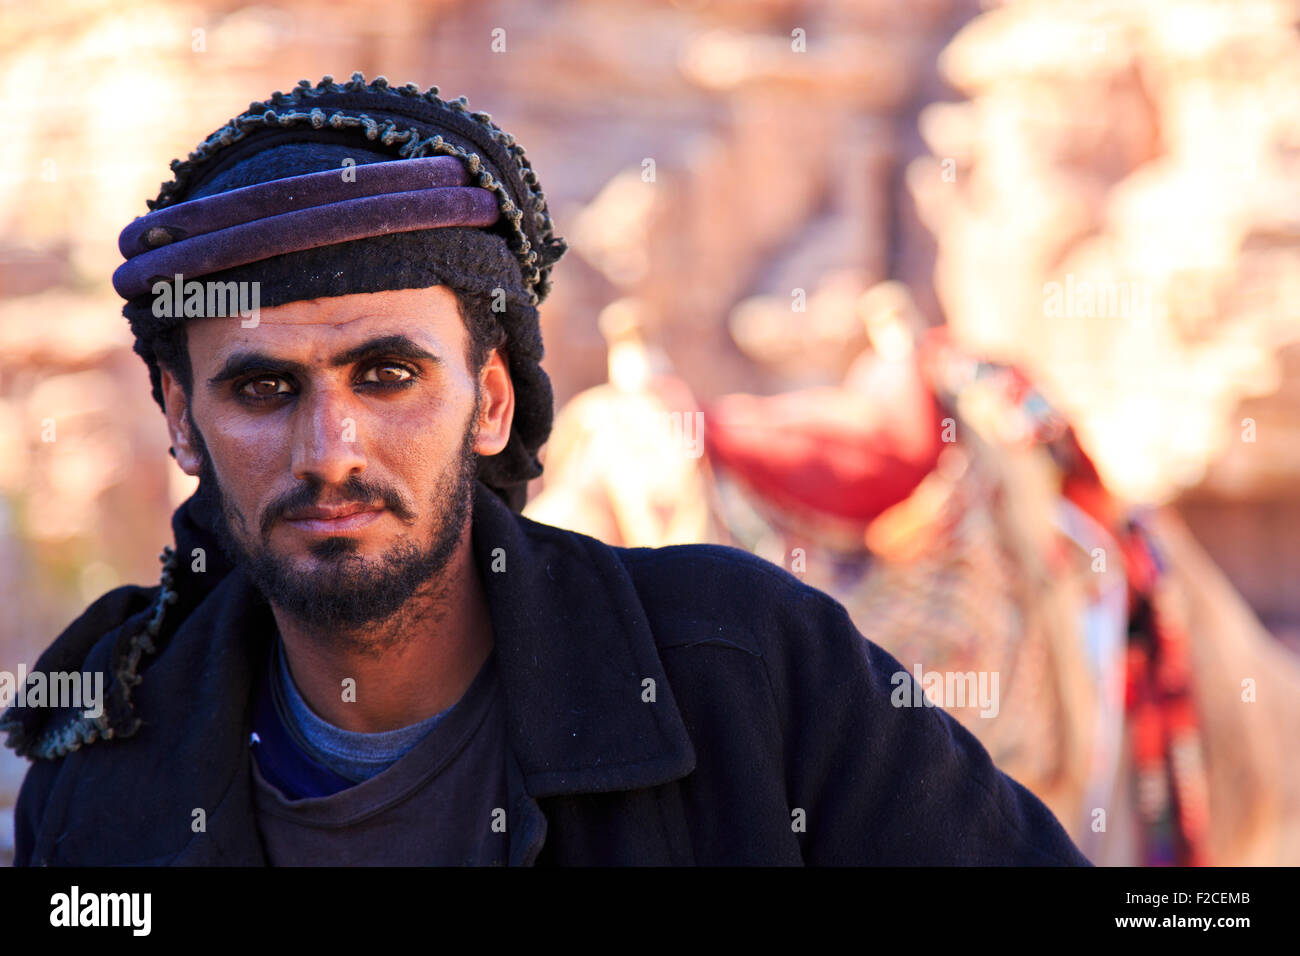 A Bedouin man in Petra, Jordan Stock Photo - Alamy